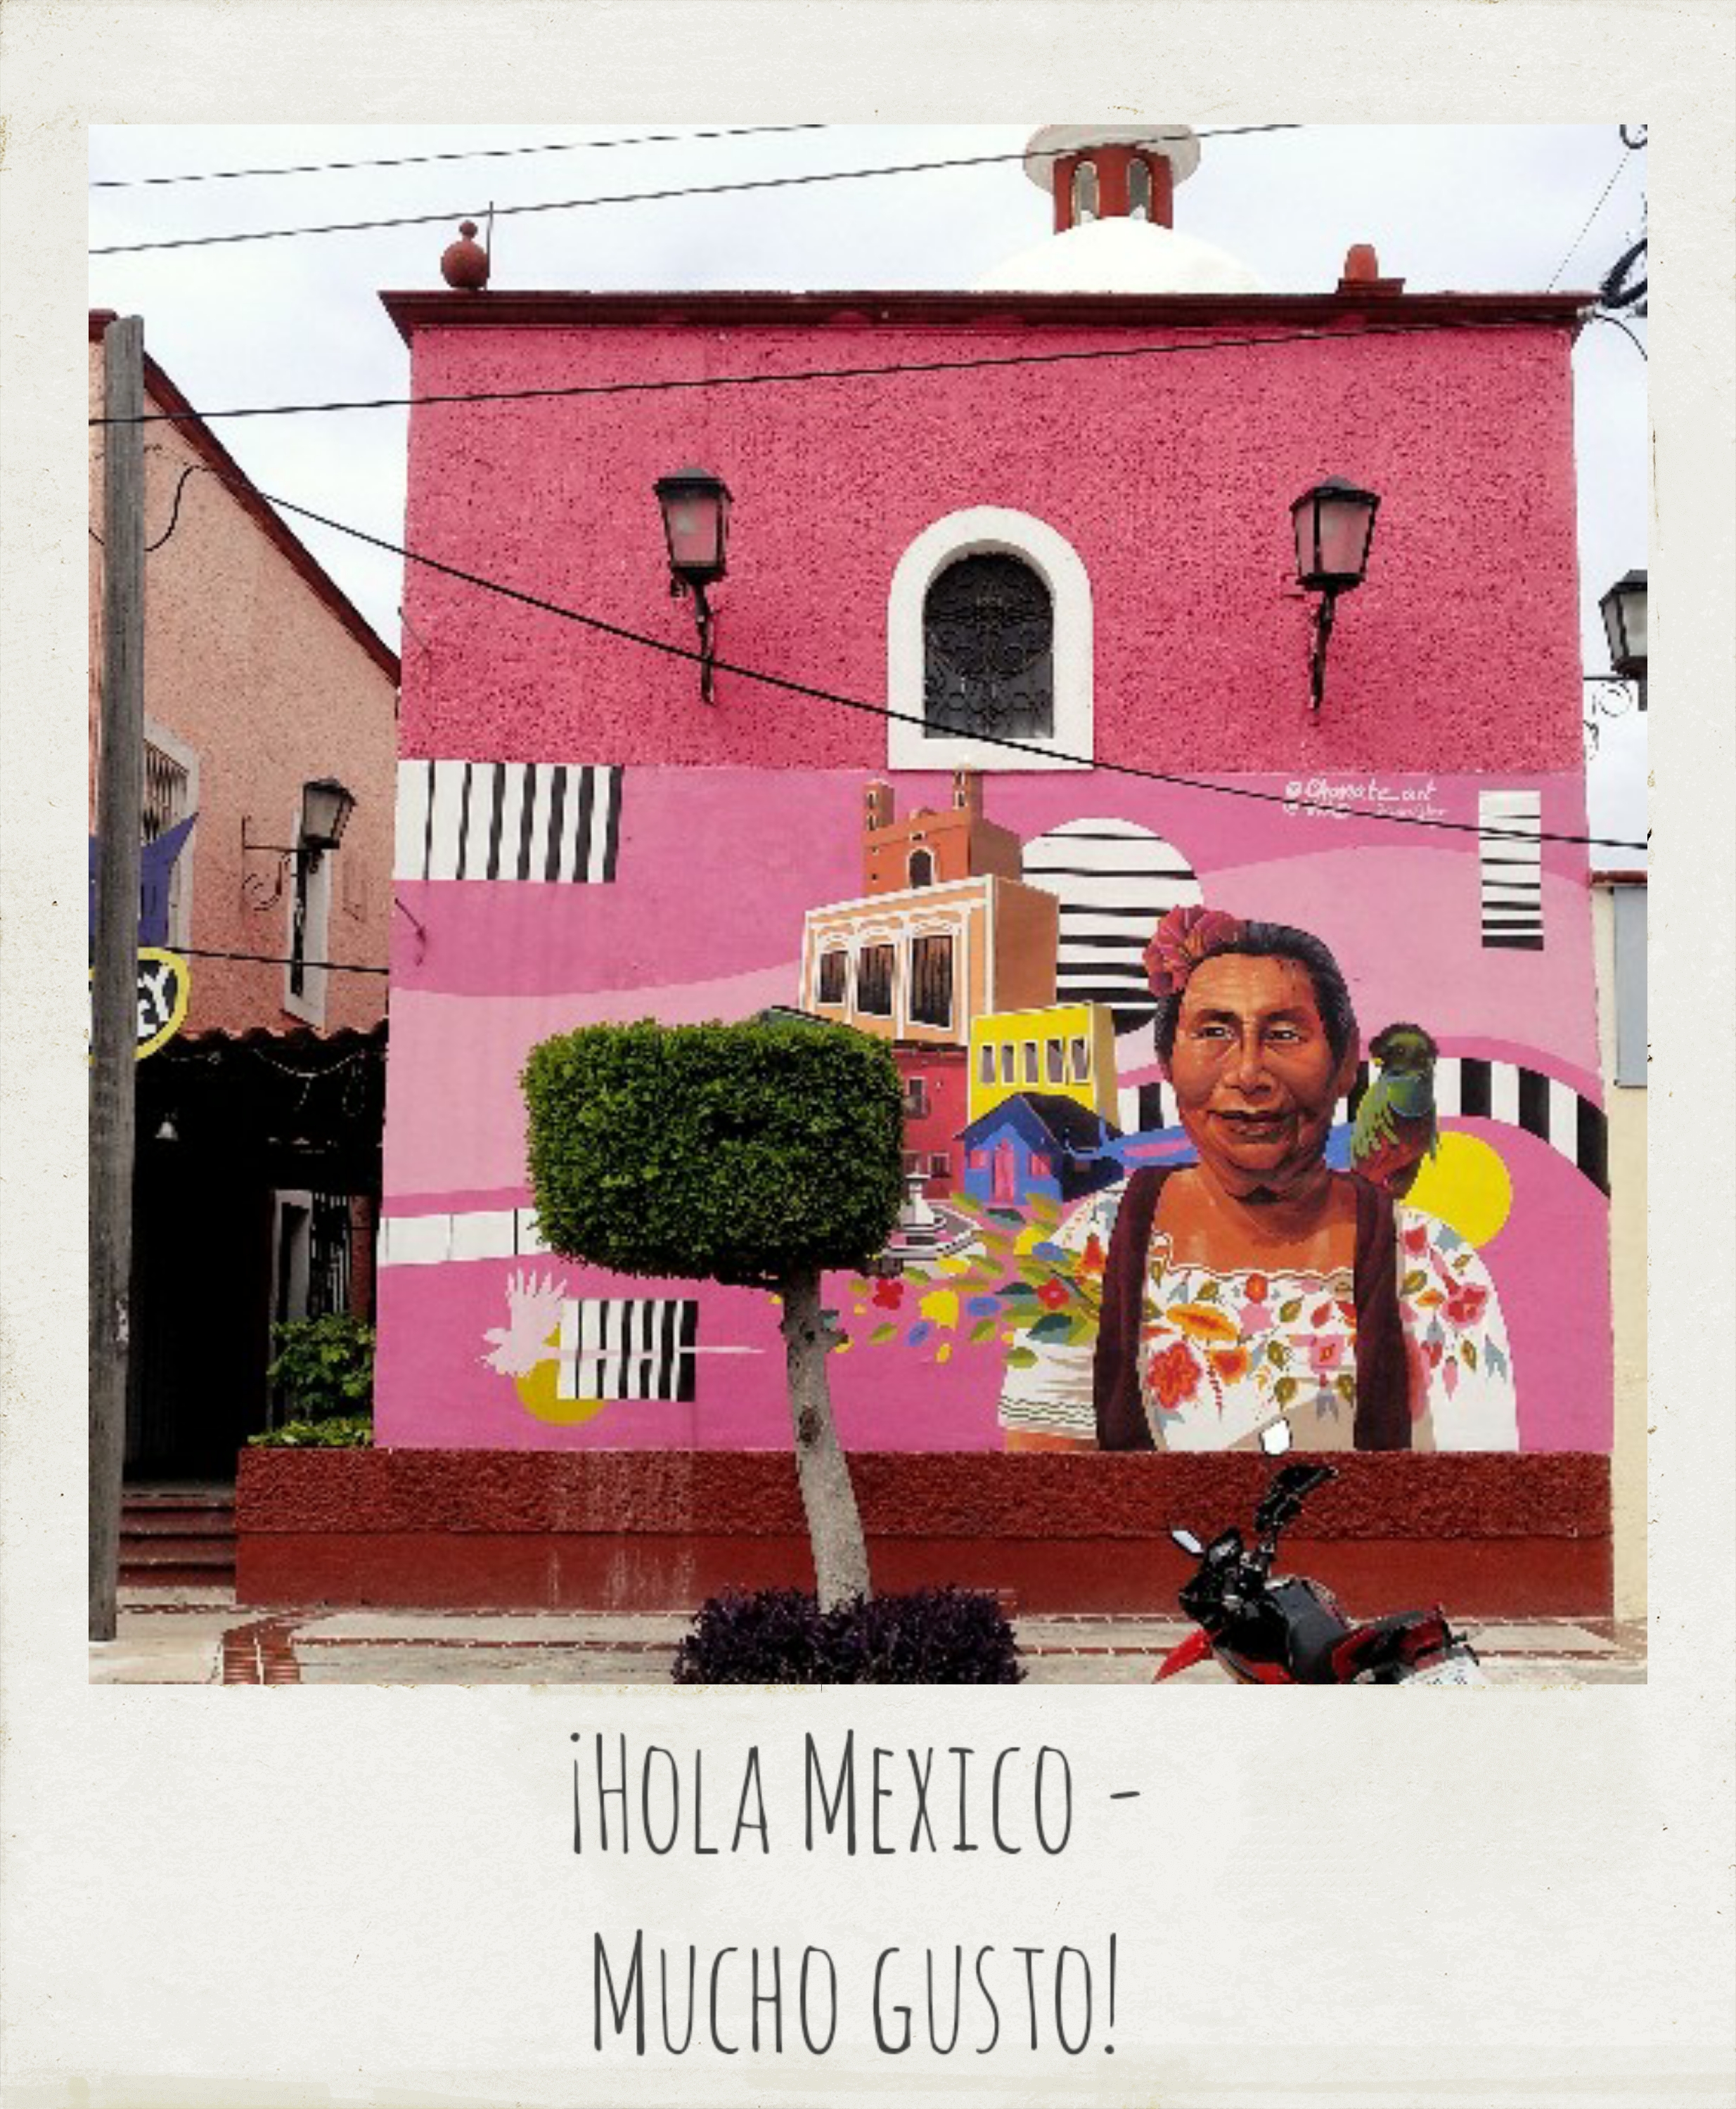 ¡Hola Mexico – Mucho Gusto!